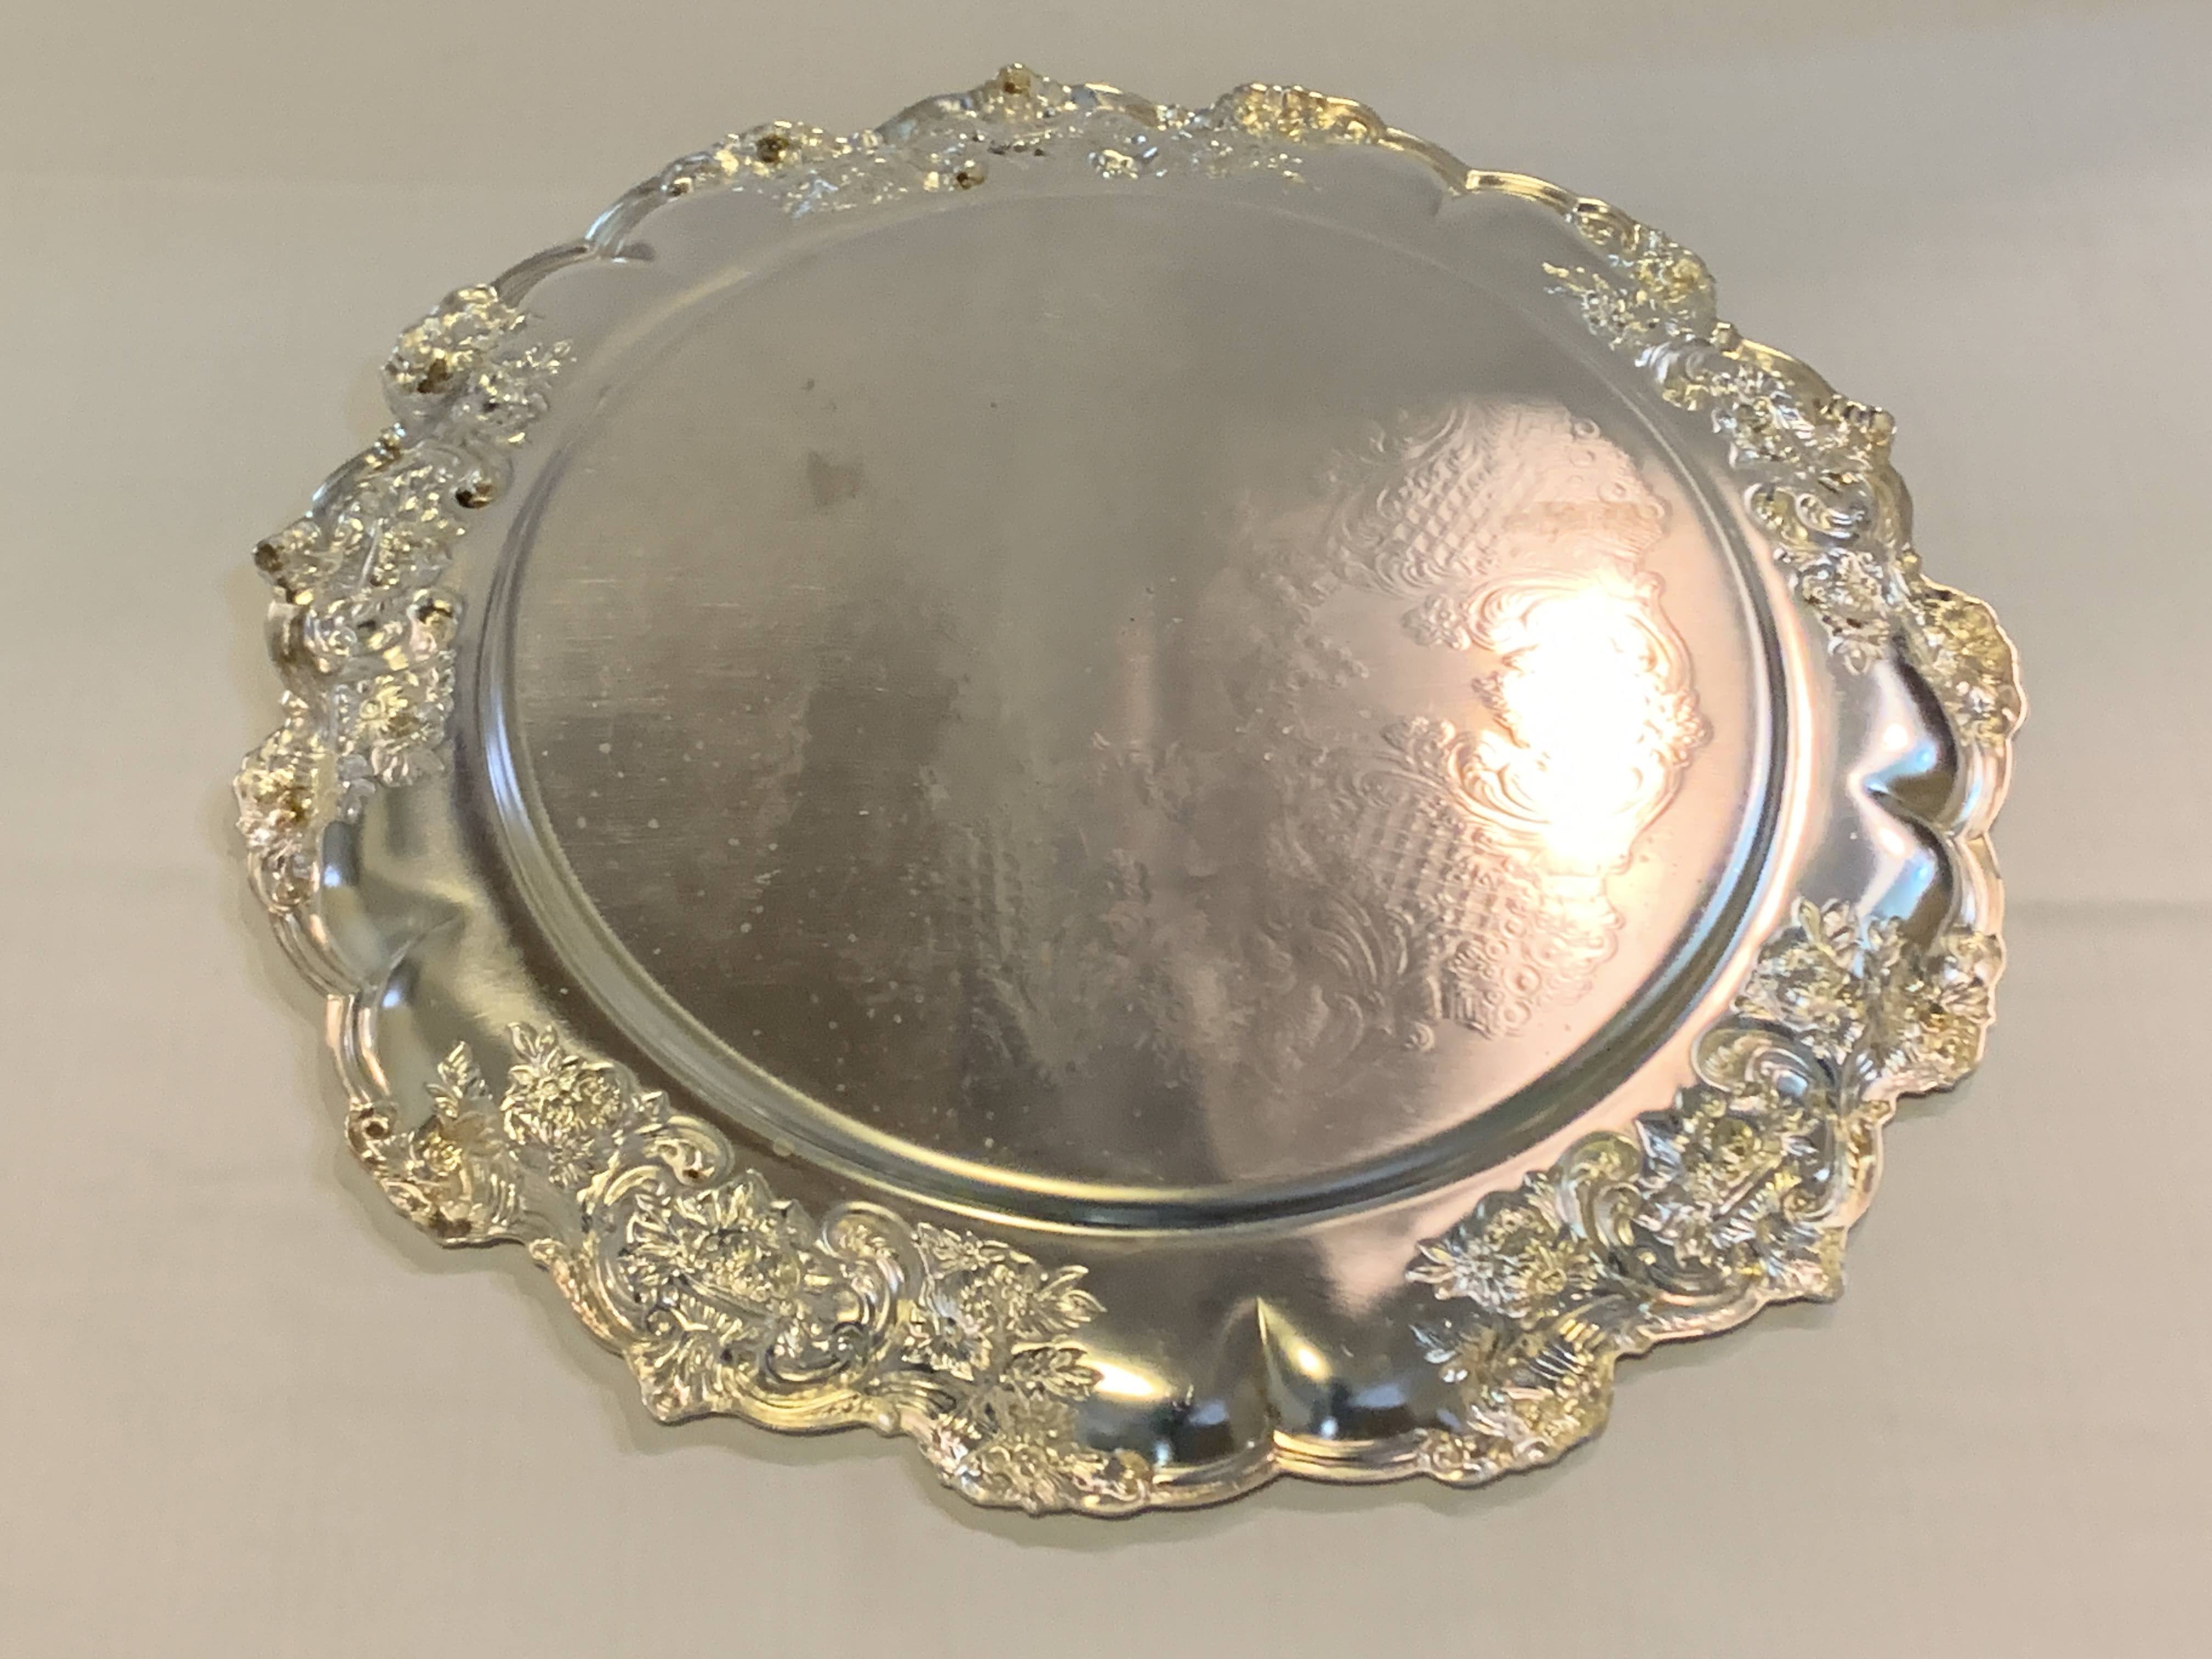 Silver Plated Mid Century Bread Platter - Ornate Rim - Engraved Ornate Pattern